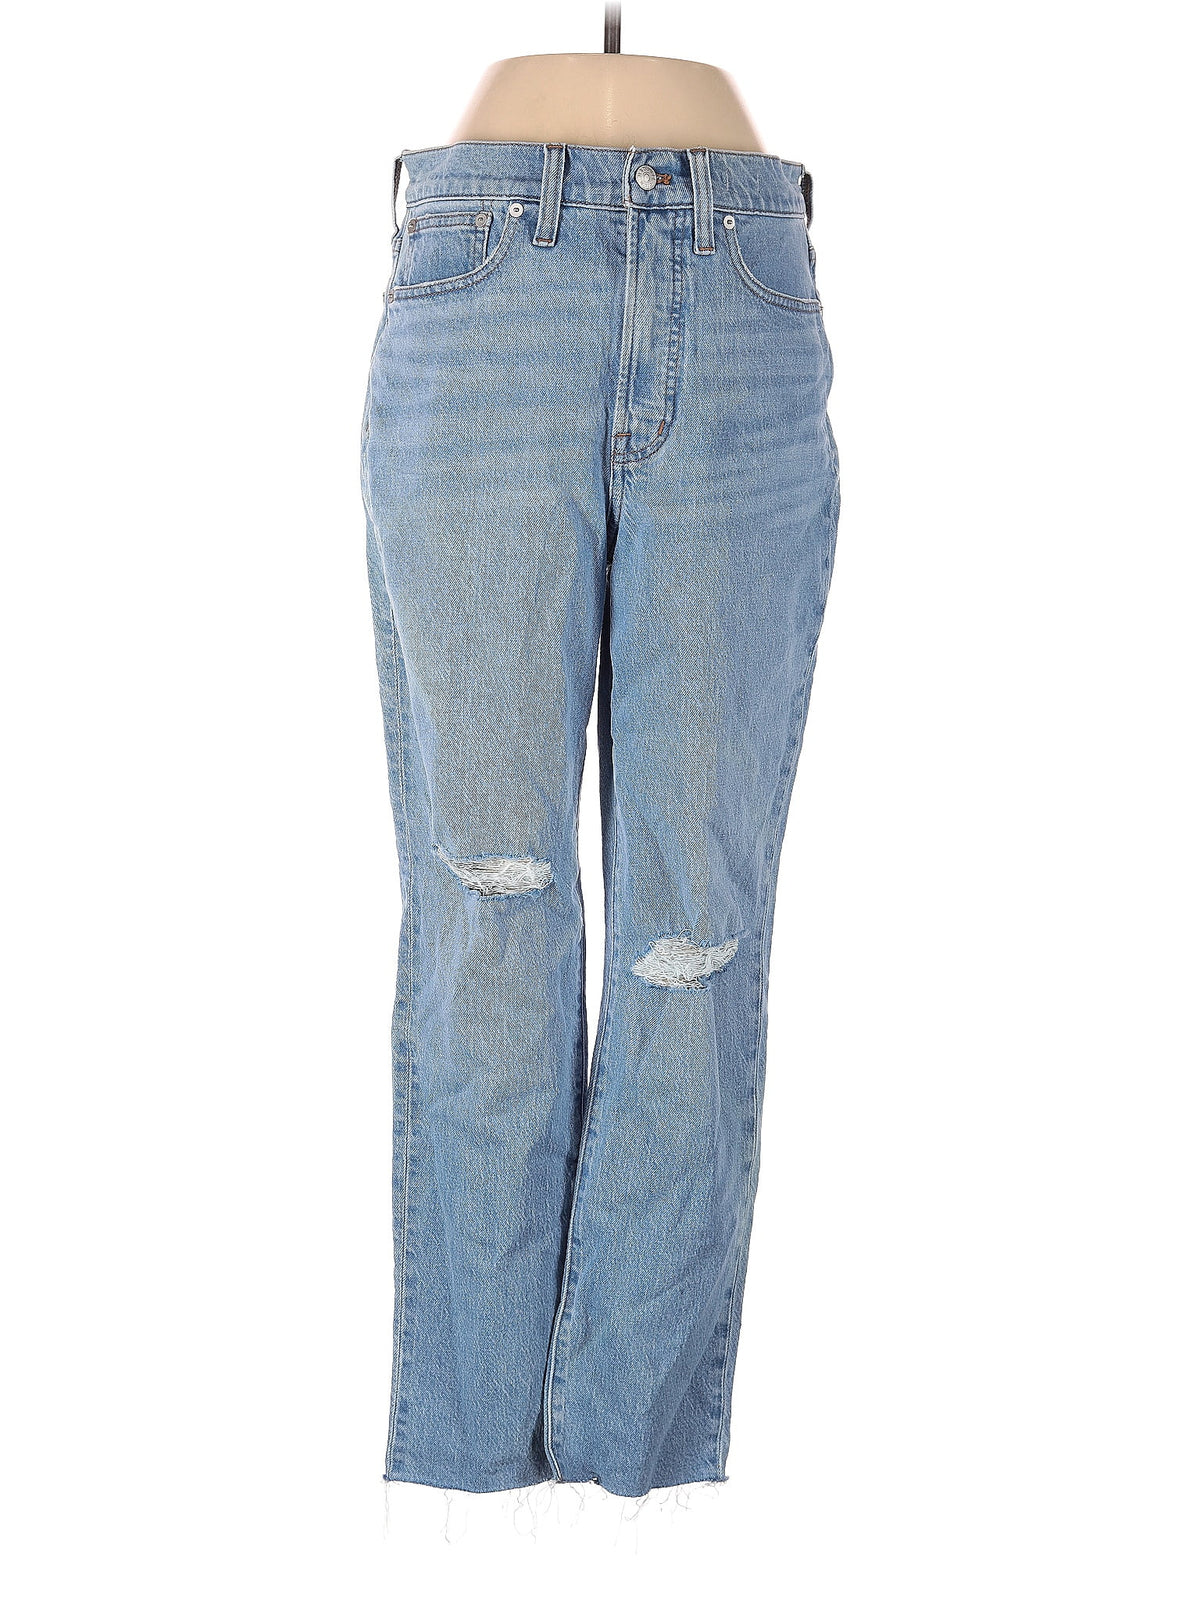 Low-Rise Wide-leg Jeans in Light Wash waist size - 27